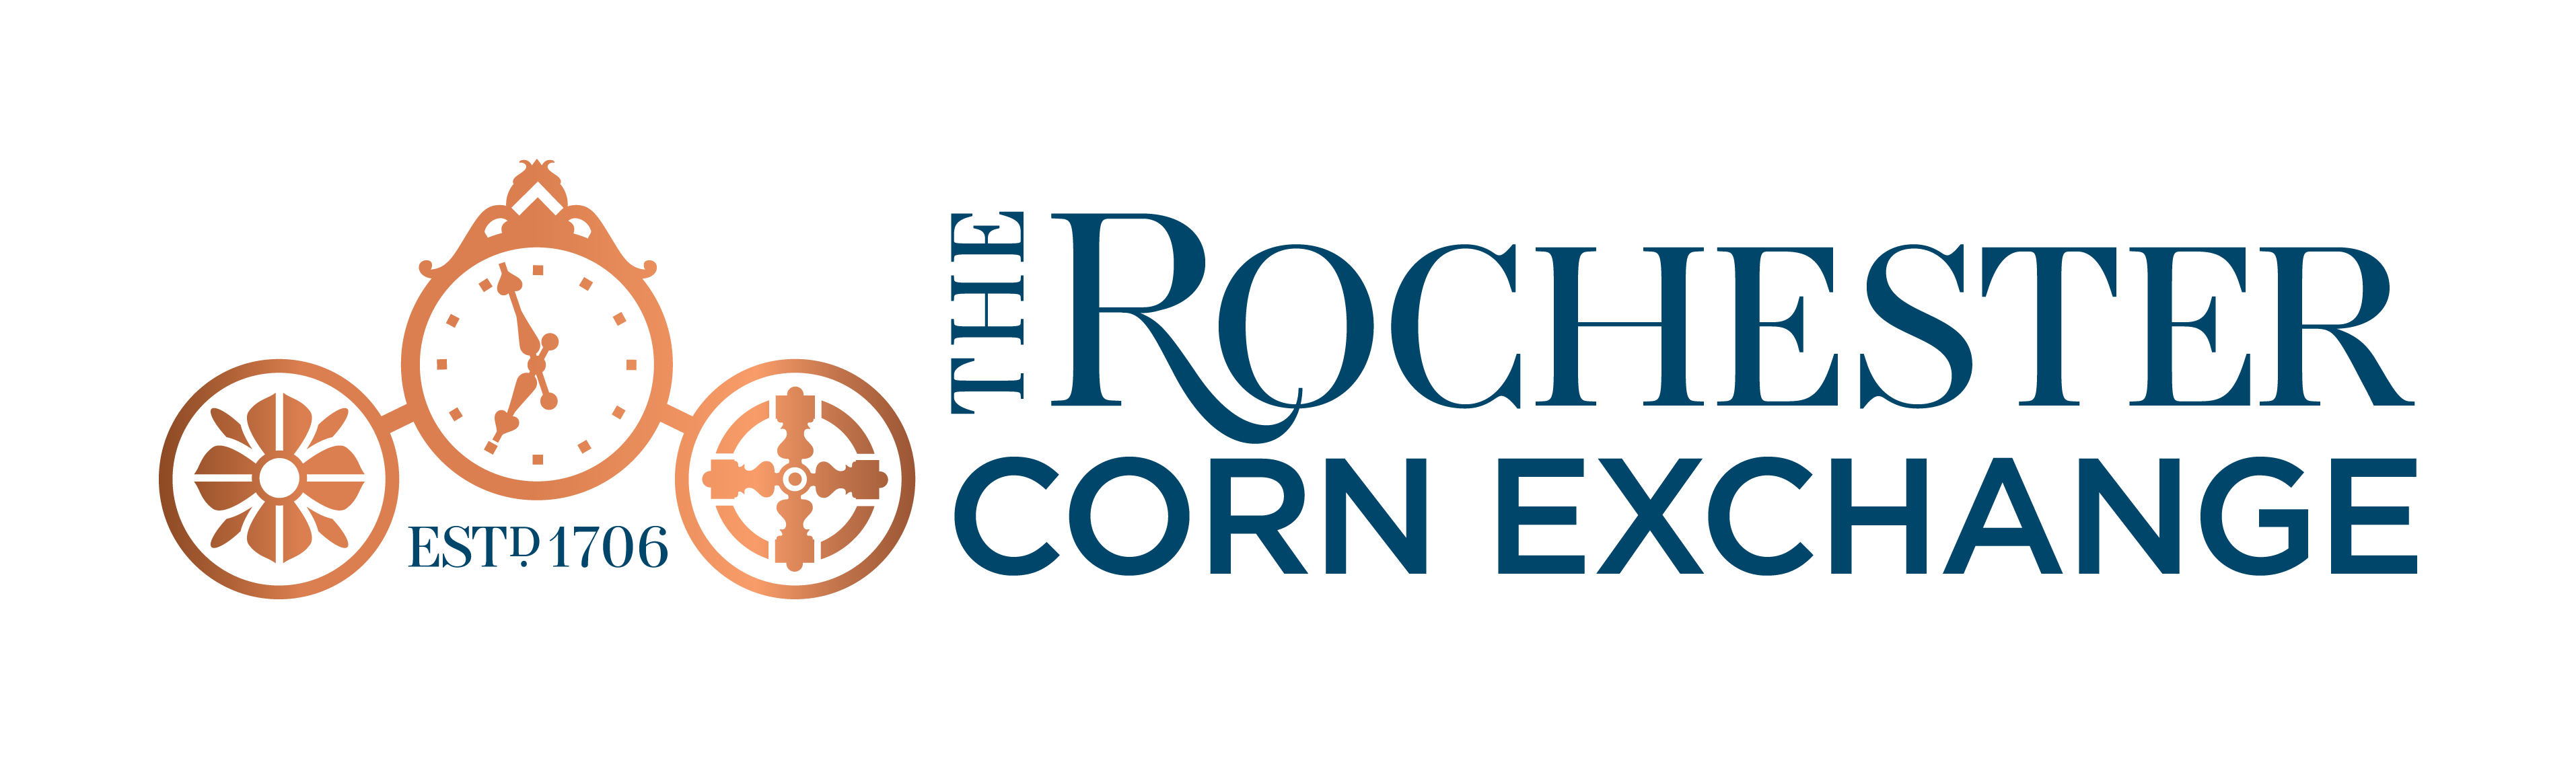 Rochester Corn Exchange